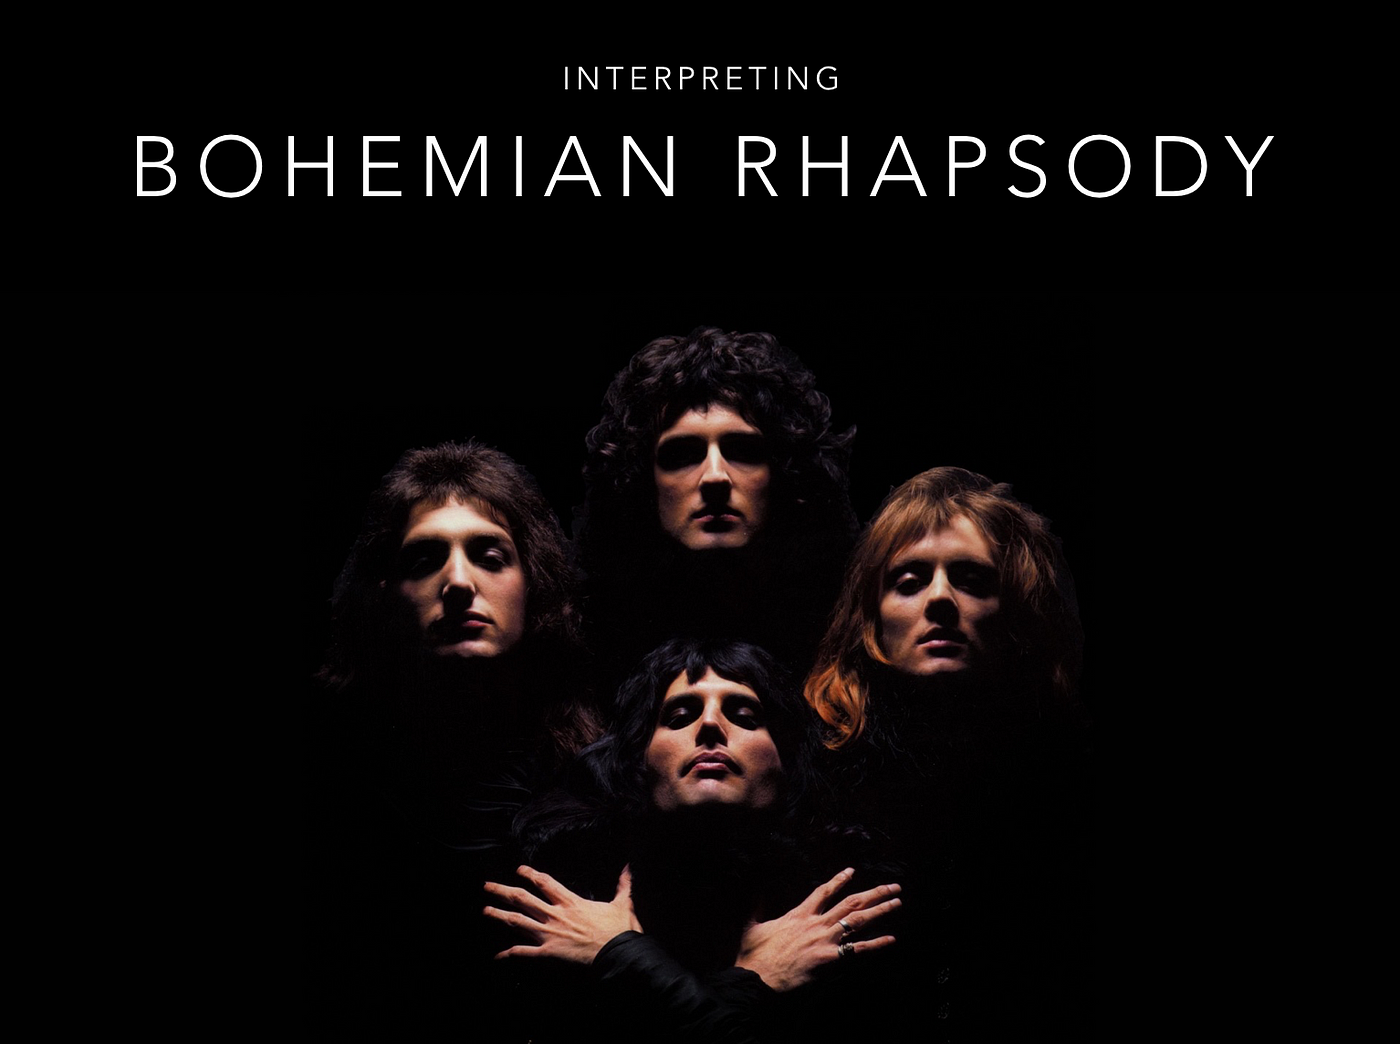 Queen Signed And Written Bohemian Rhapsody Lyrics